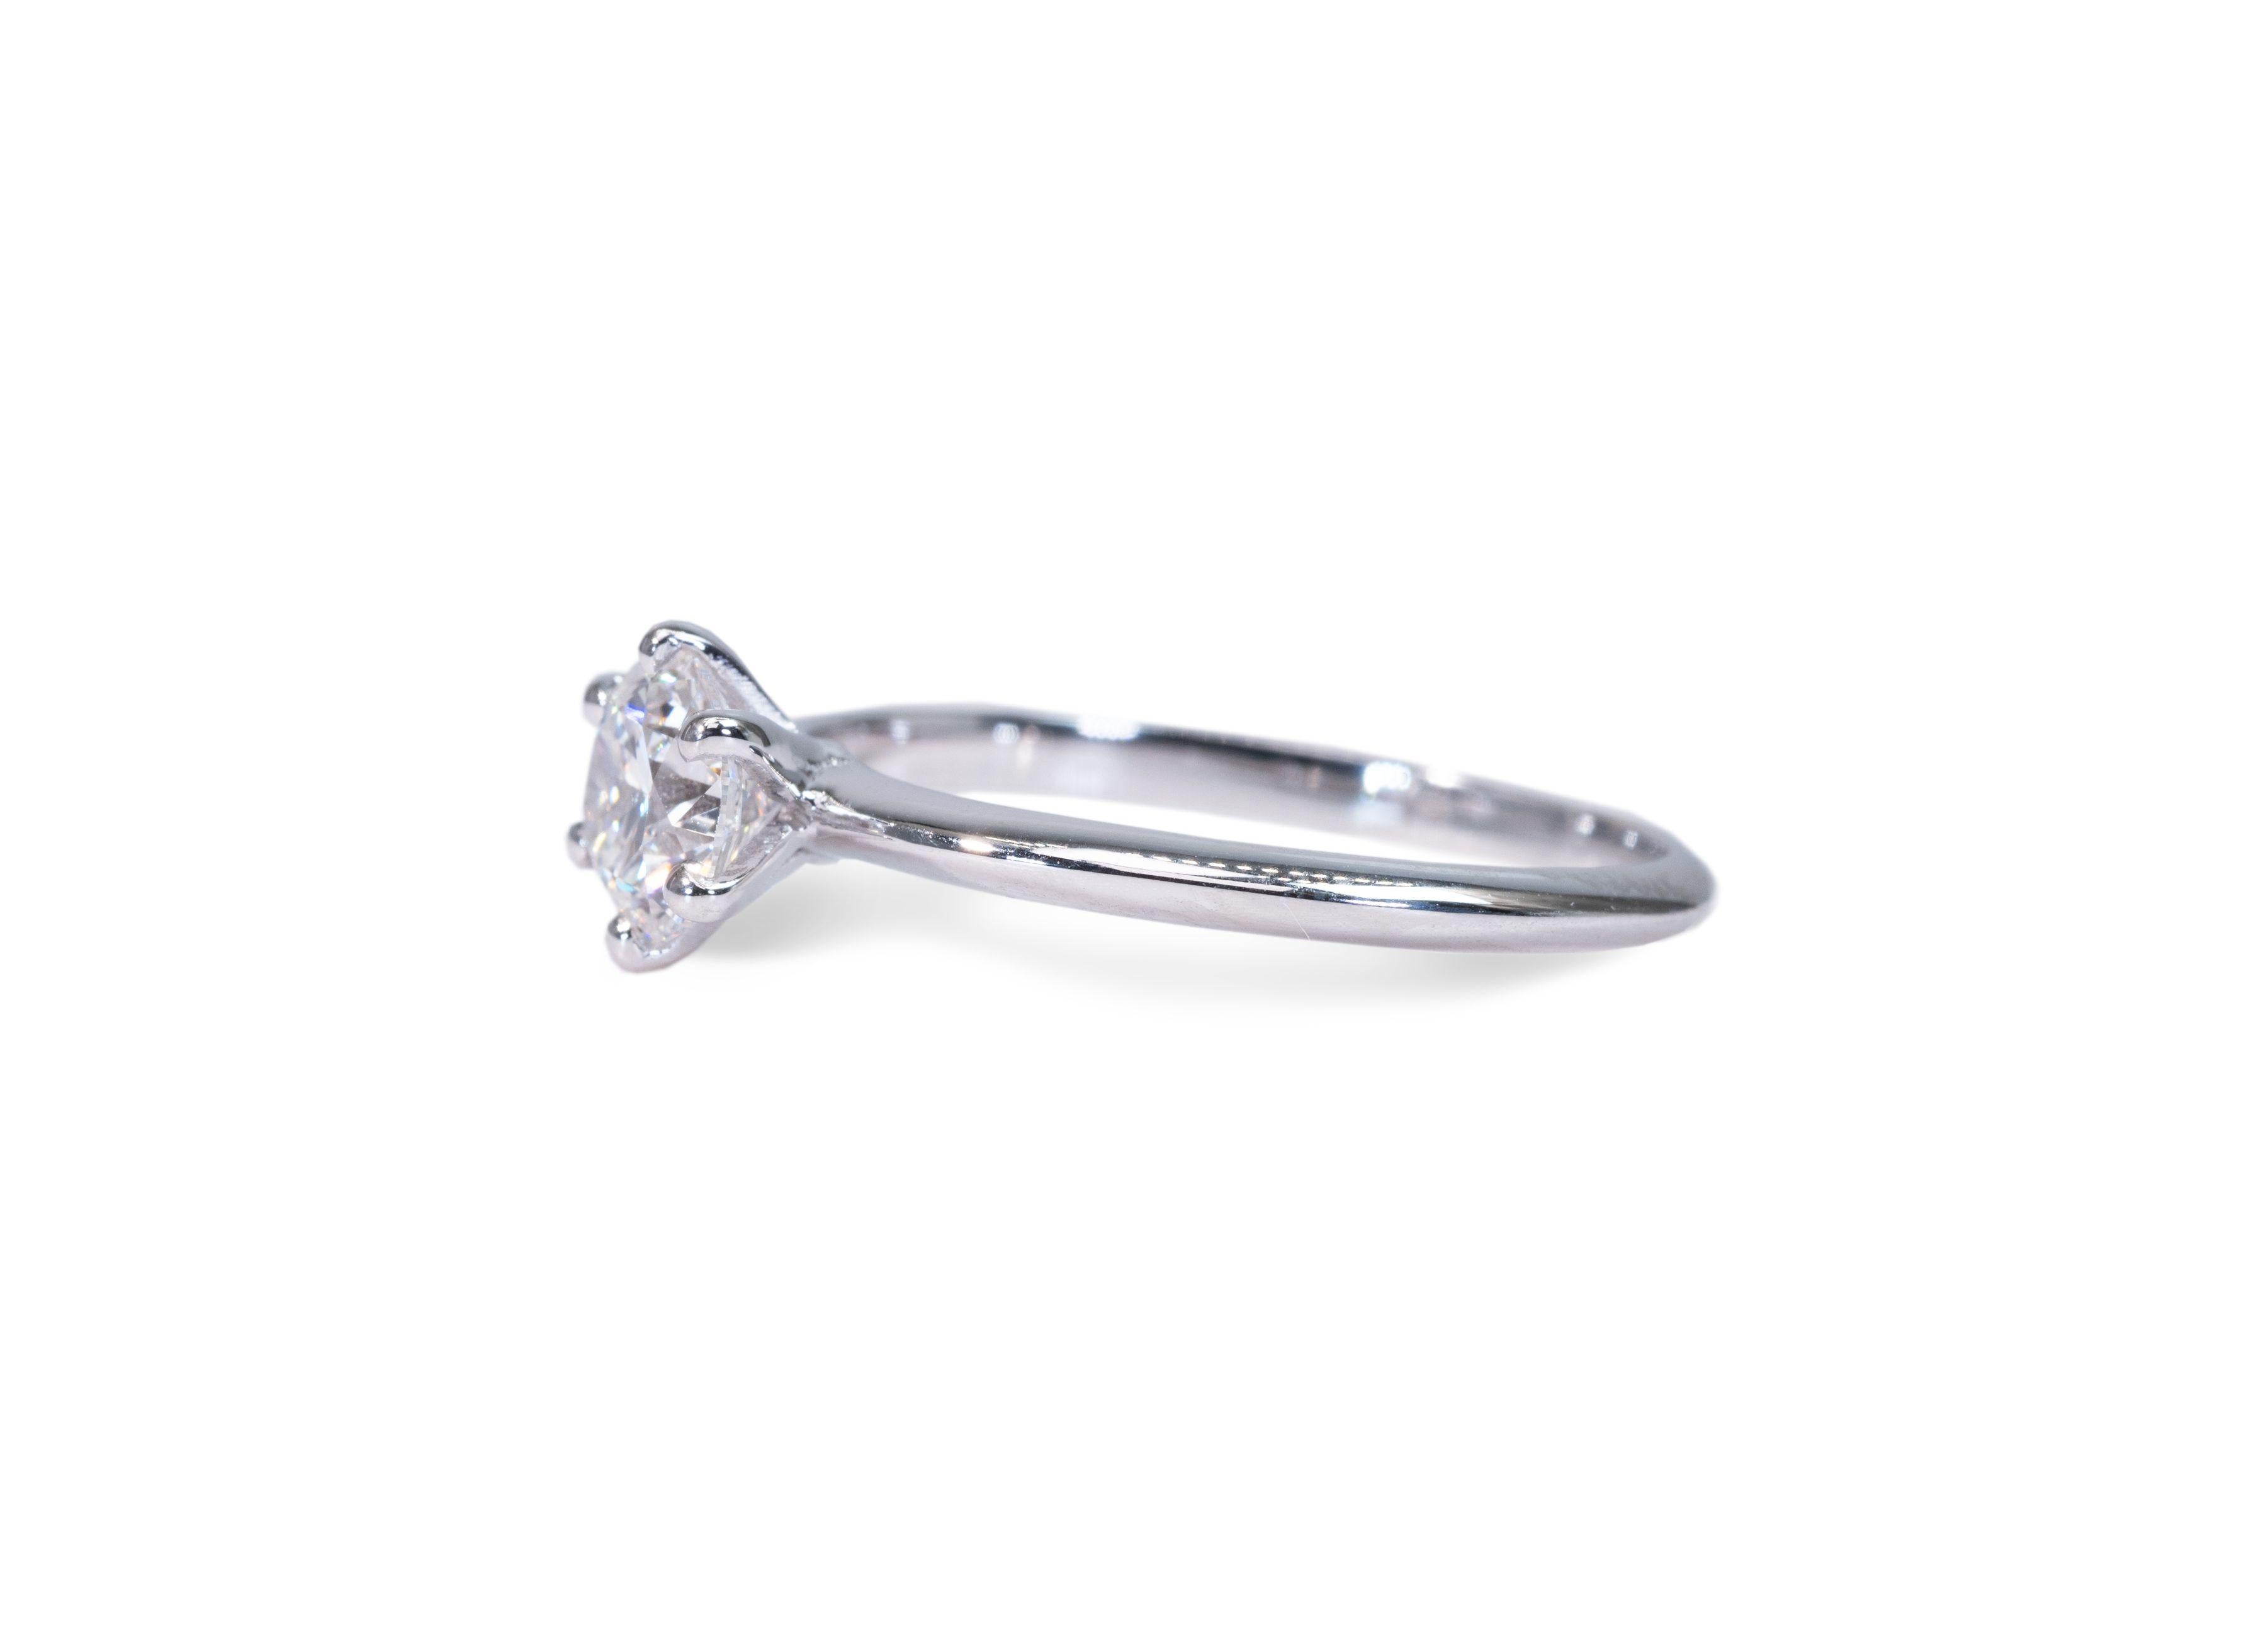 Women's Marvelous 18k White Gold Engagement Ring w/ 1ct Natural Diamonds IGI Certificate For Sale